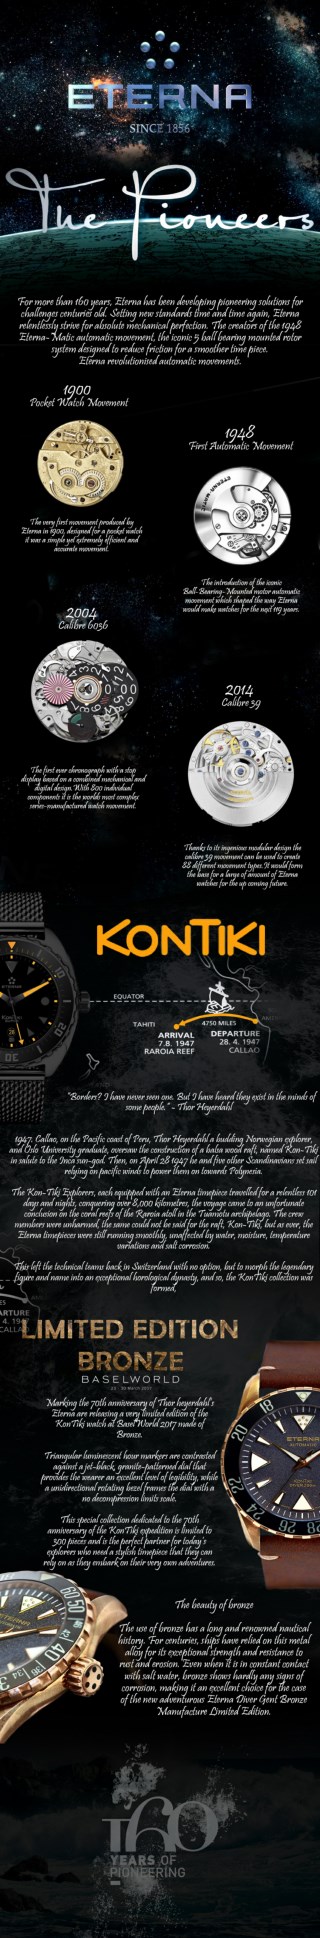 Eterna Watches Infographic